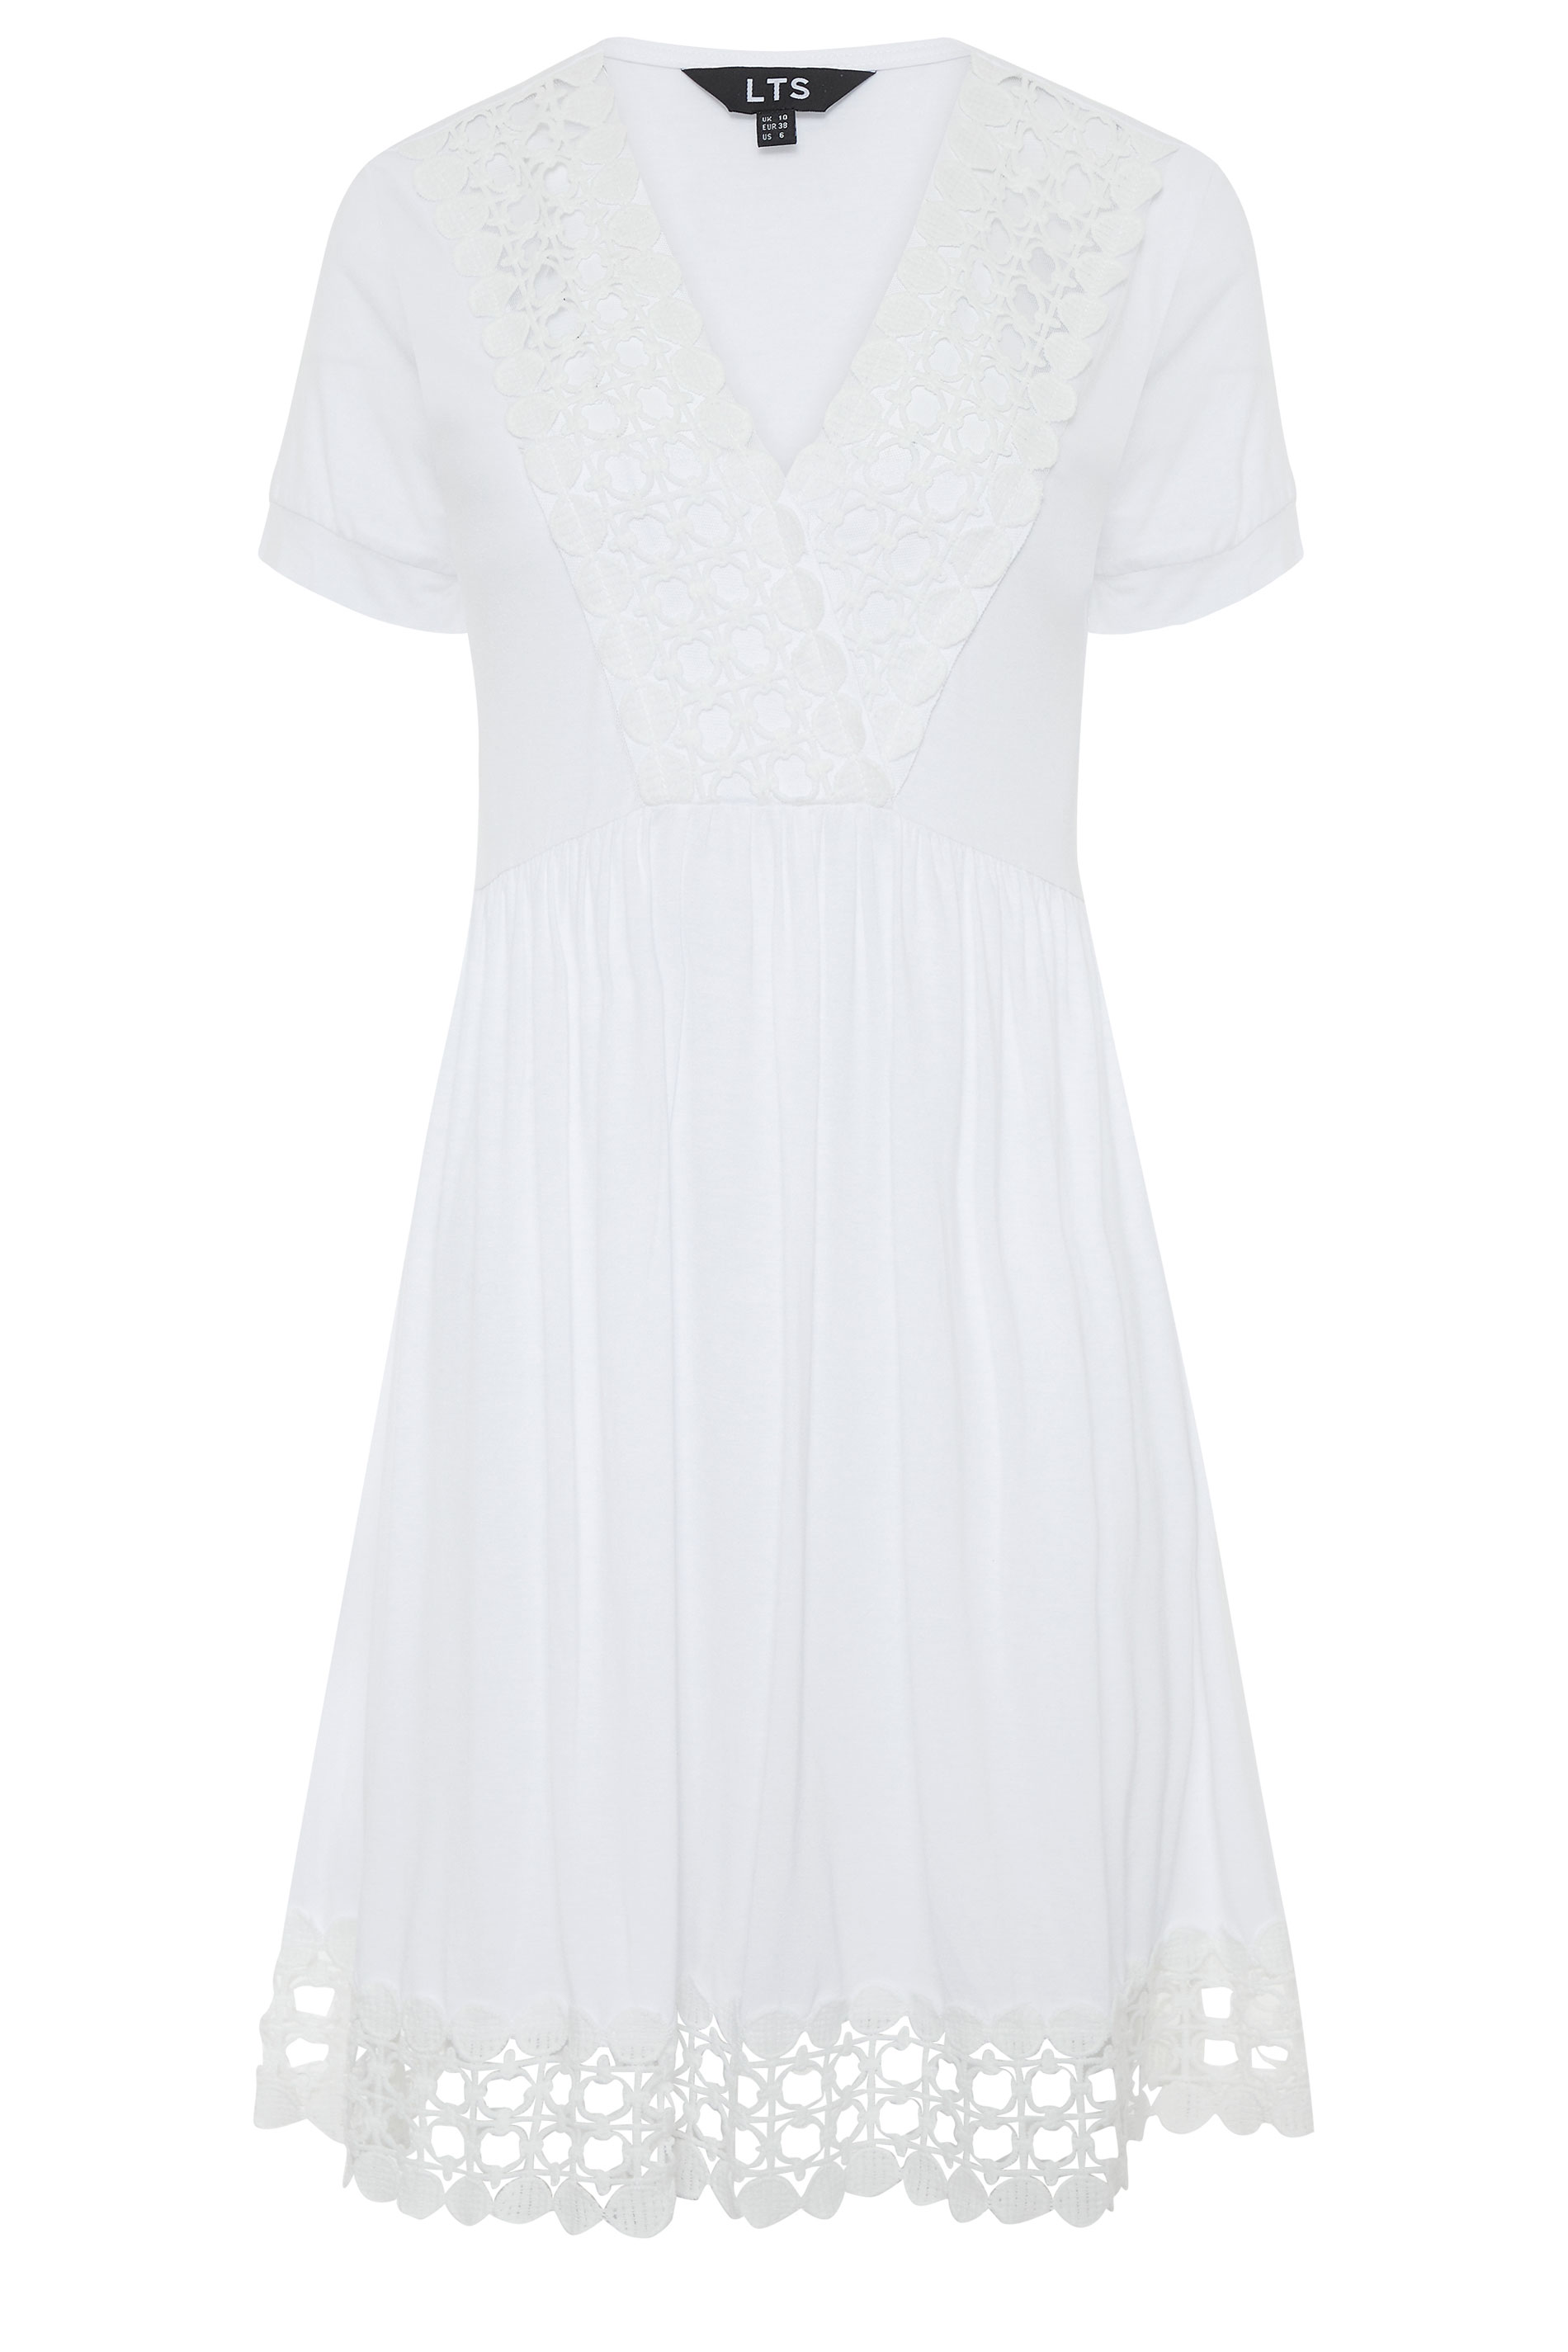 LTS White Crochet Trim Dress | Long Tall Sally